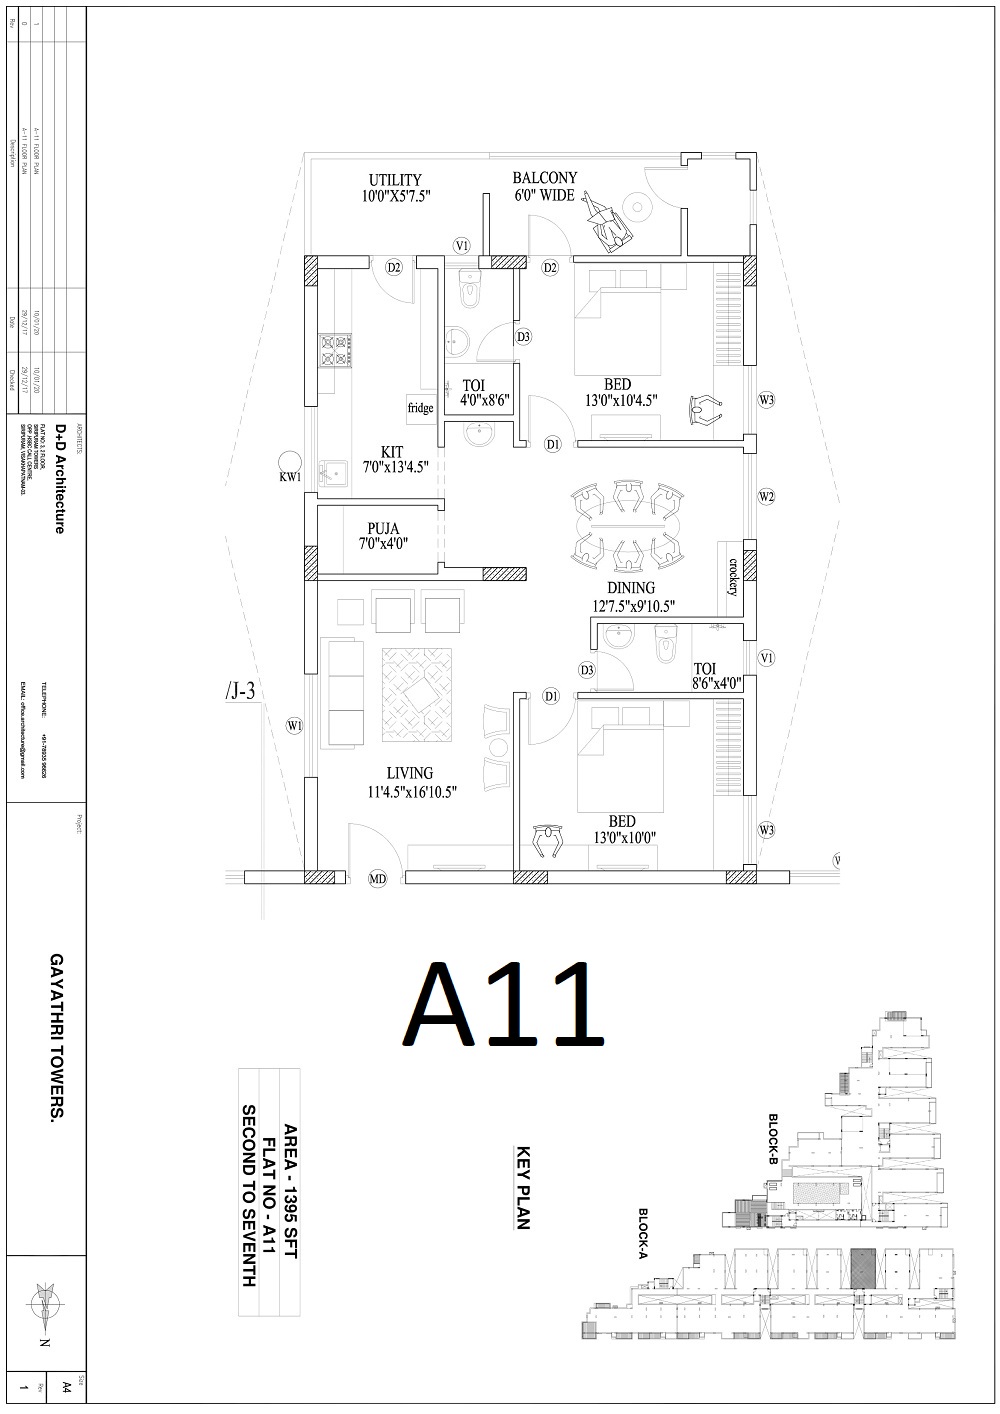 A11 - Tipcal Floor Plan